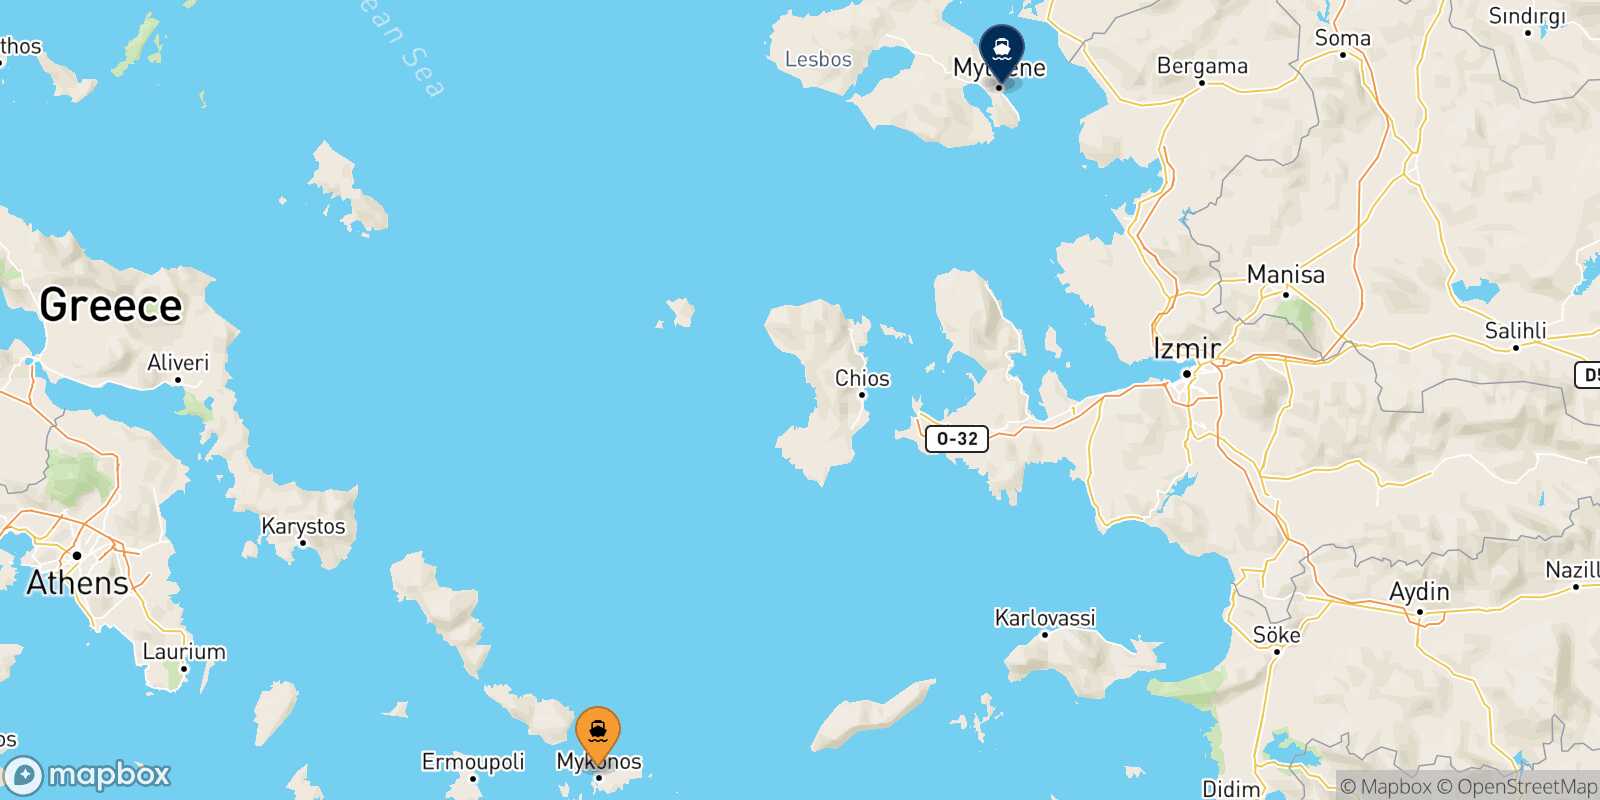 Mykonos Mytilene (Lesvos) route map